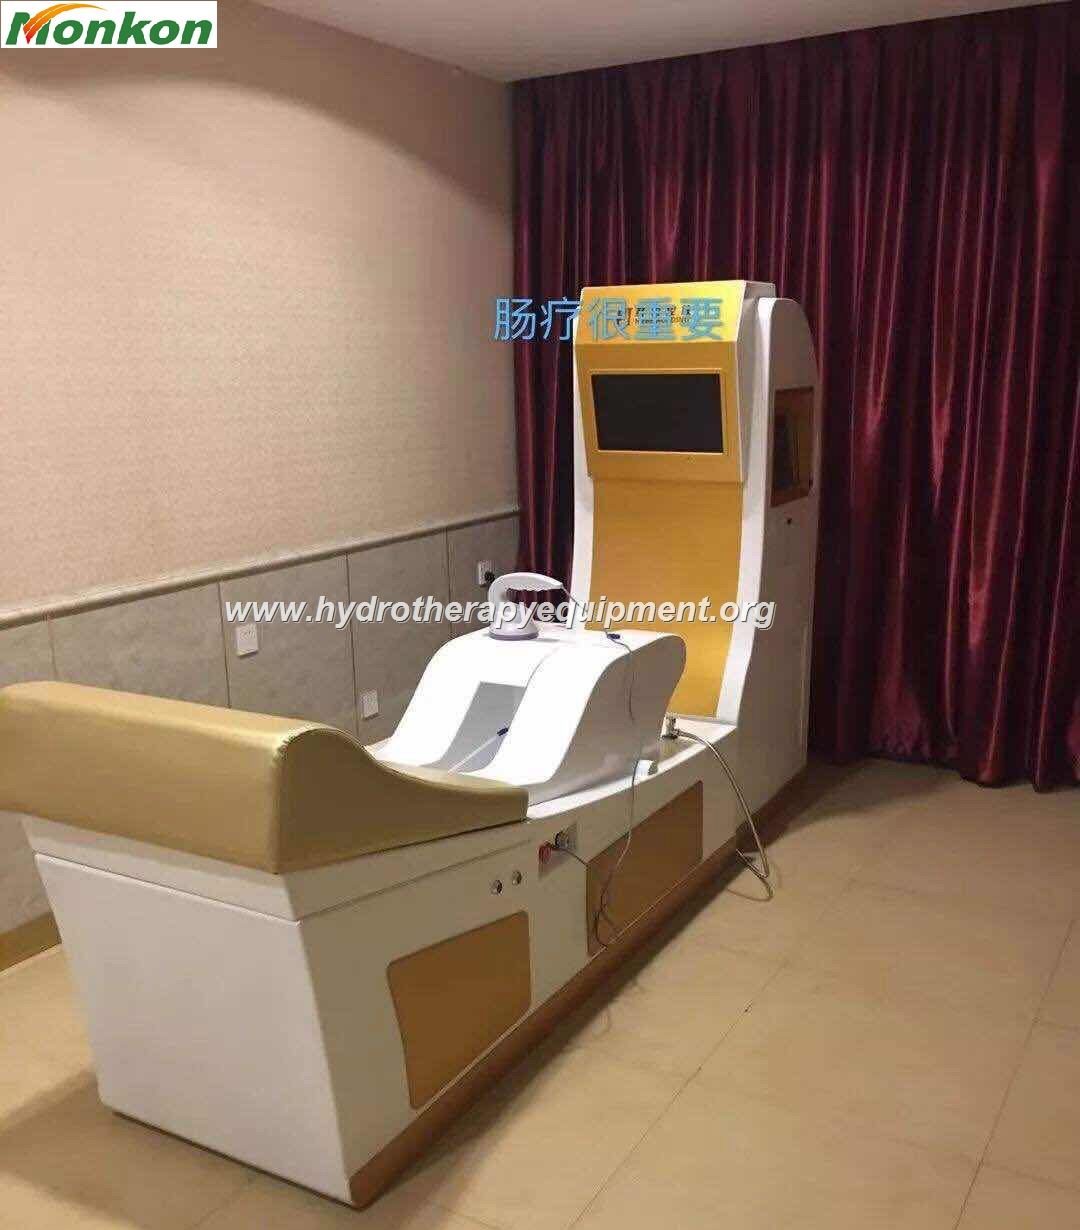 Máquina de hidroterapia de colon en casa